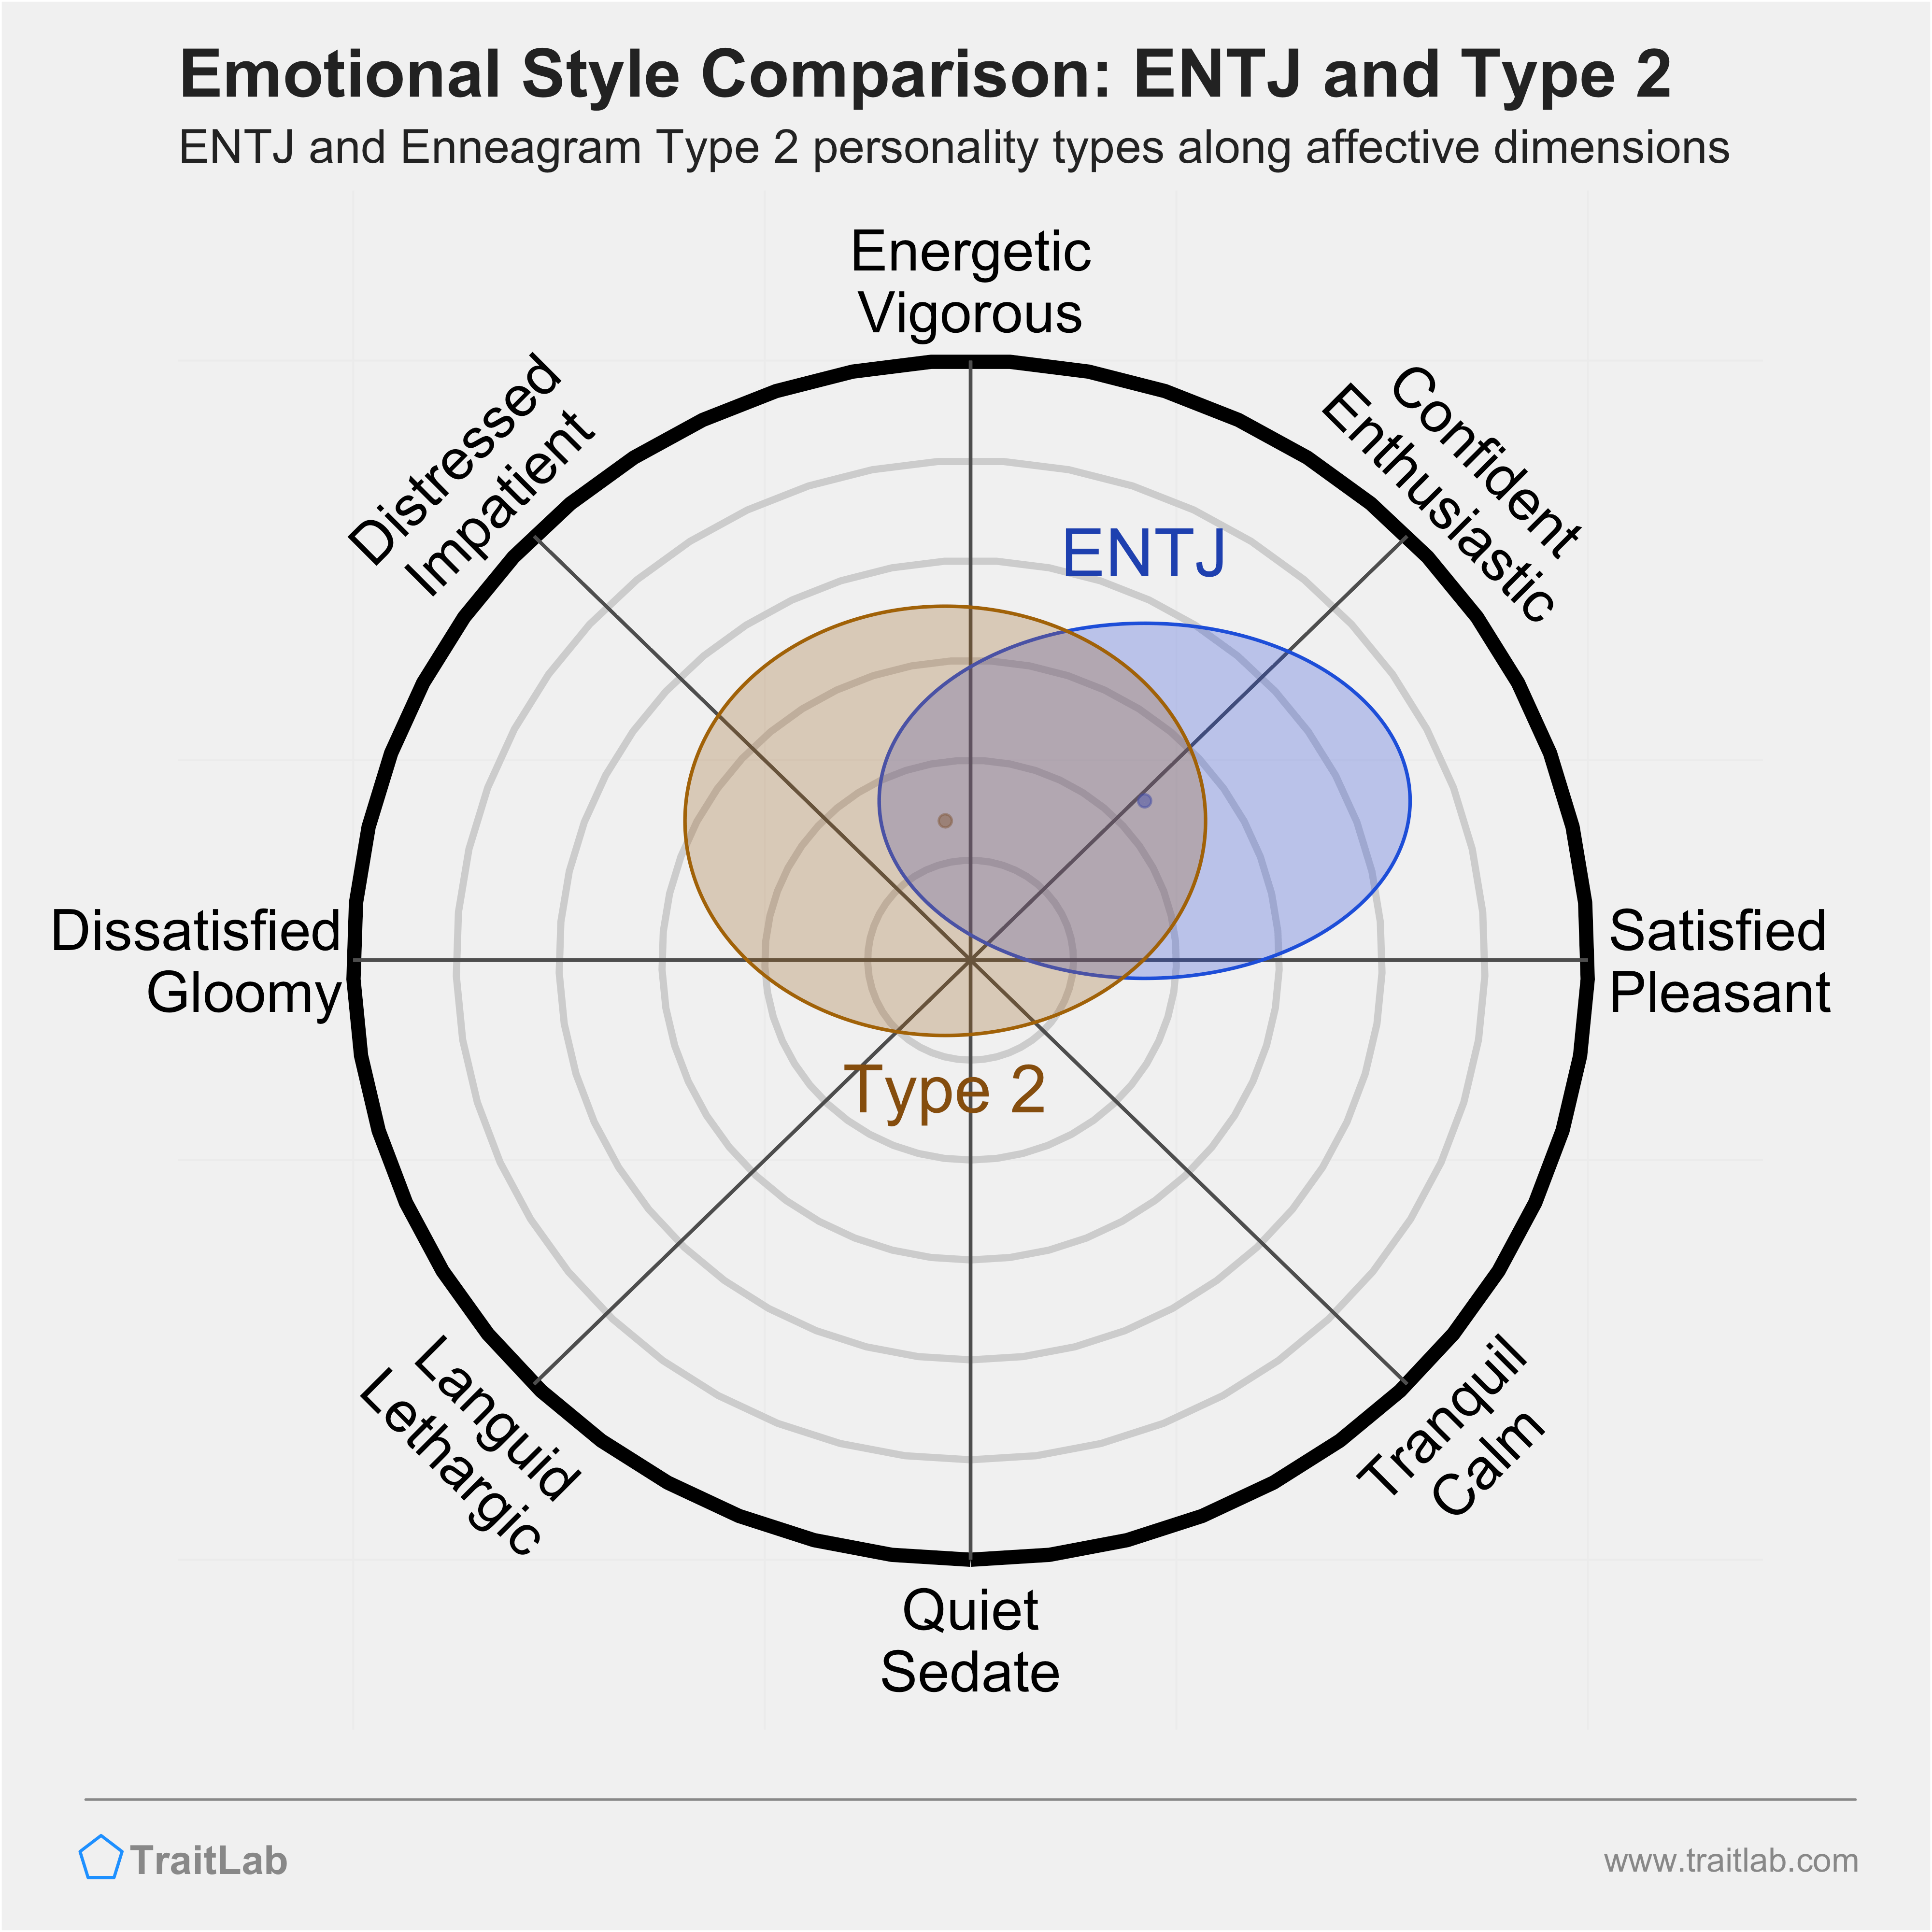 ENTJ and Type 2 comparison across emotional (affective) dimensions